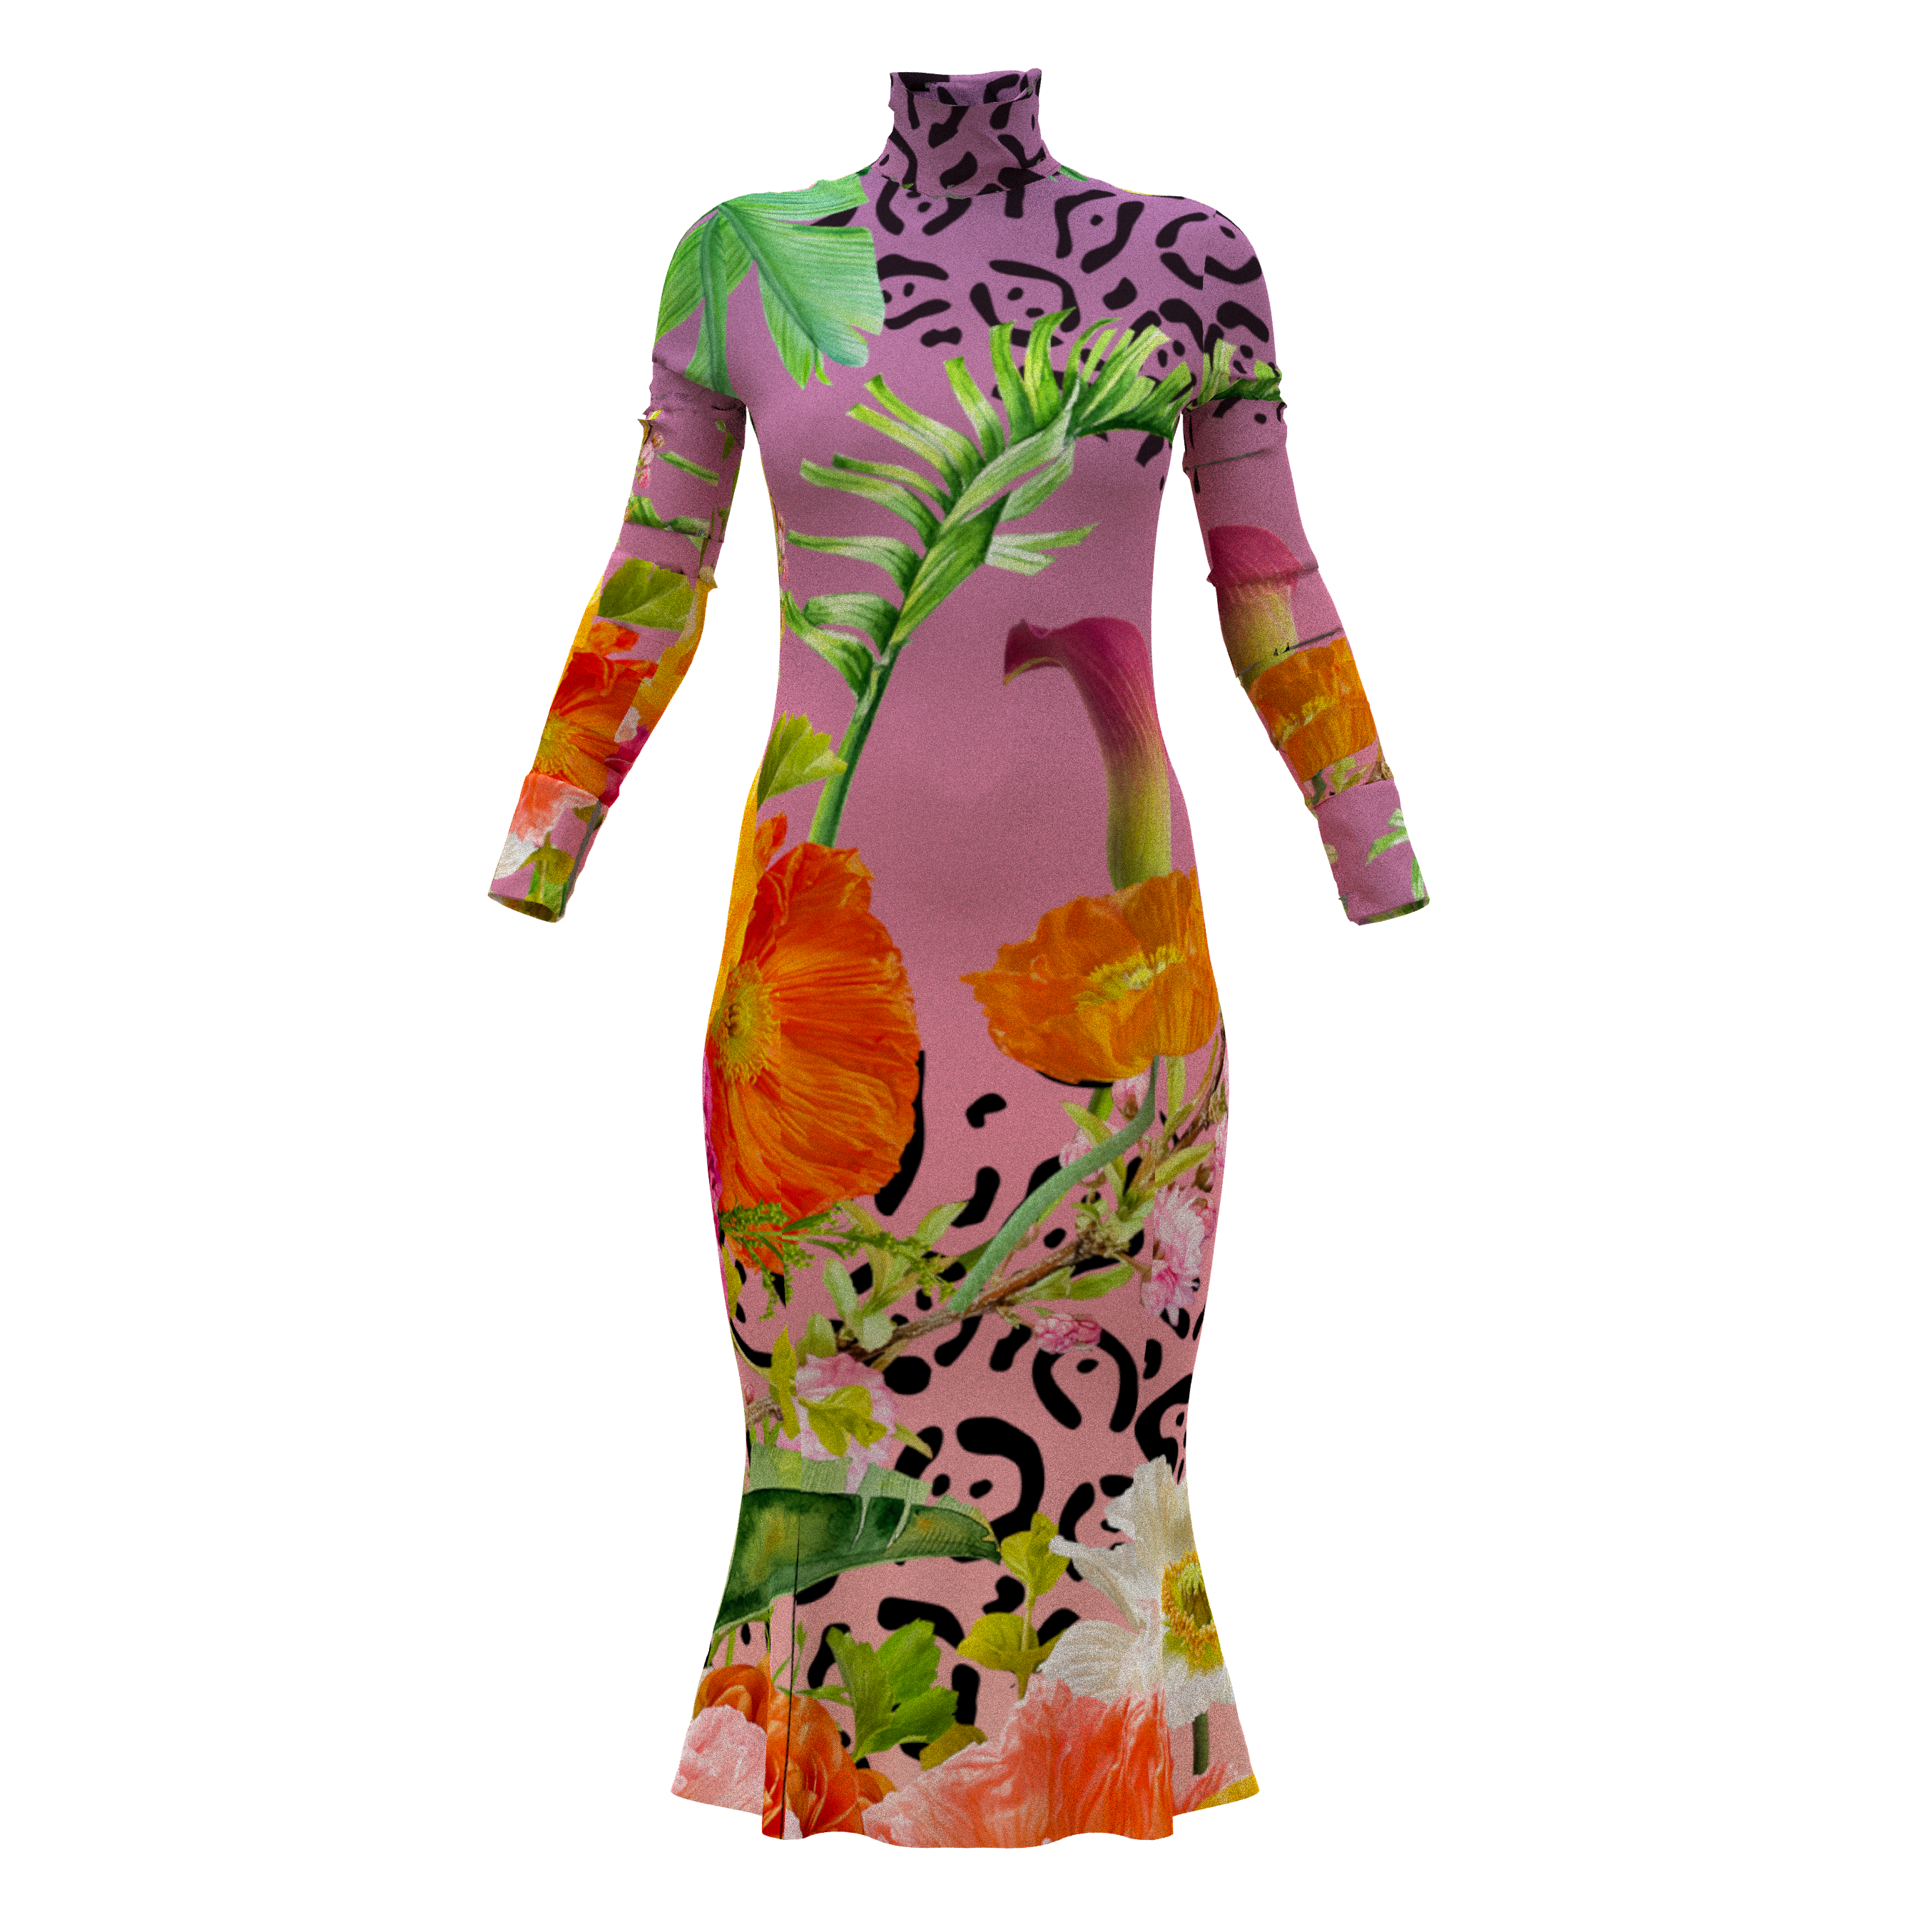 Turtleneck Whitney Dress - Spring Dream (Printed to Order)